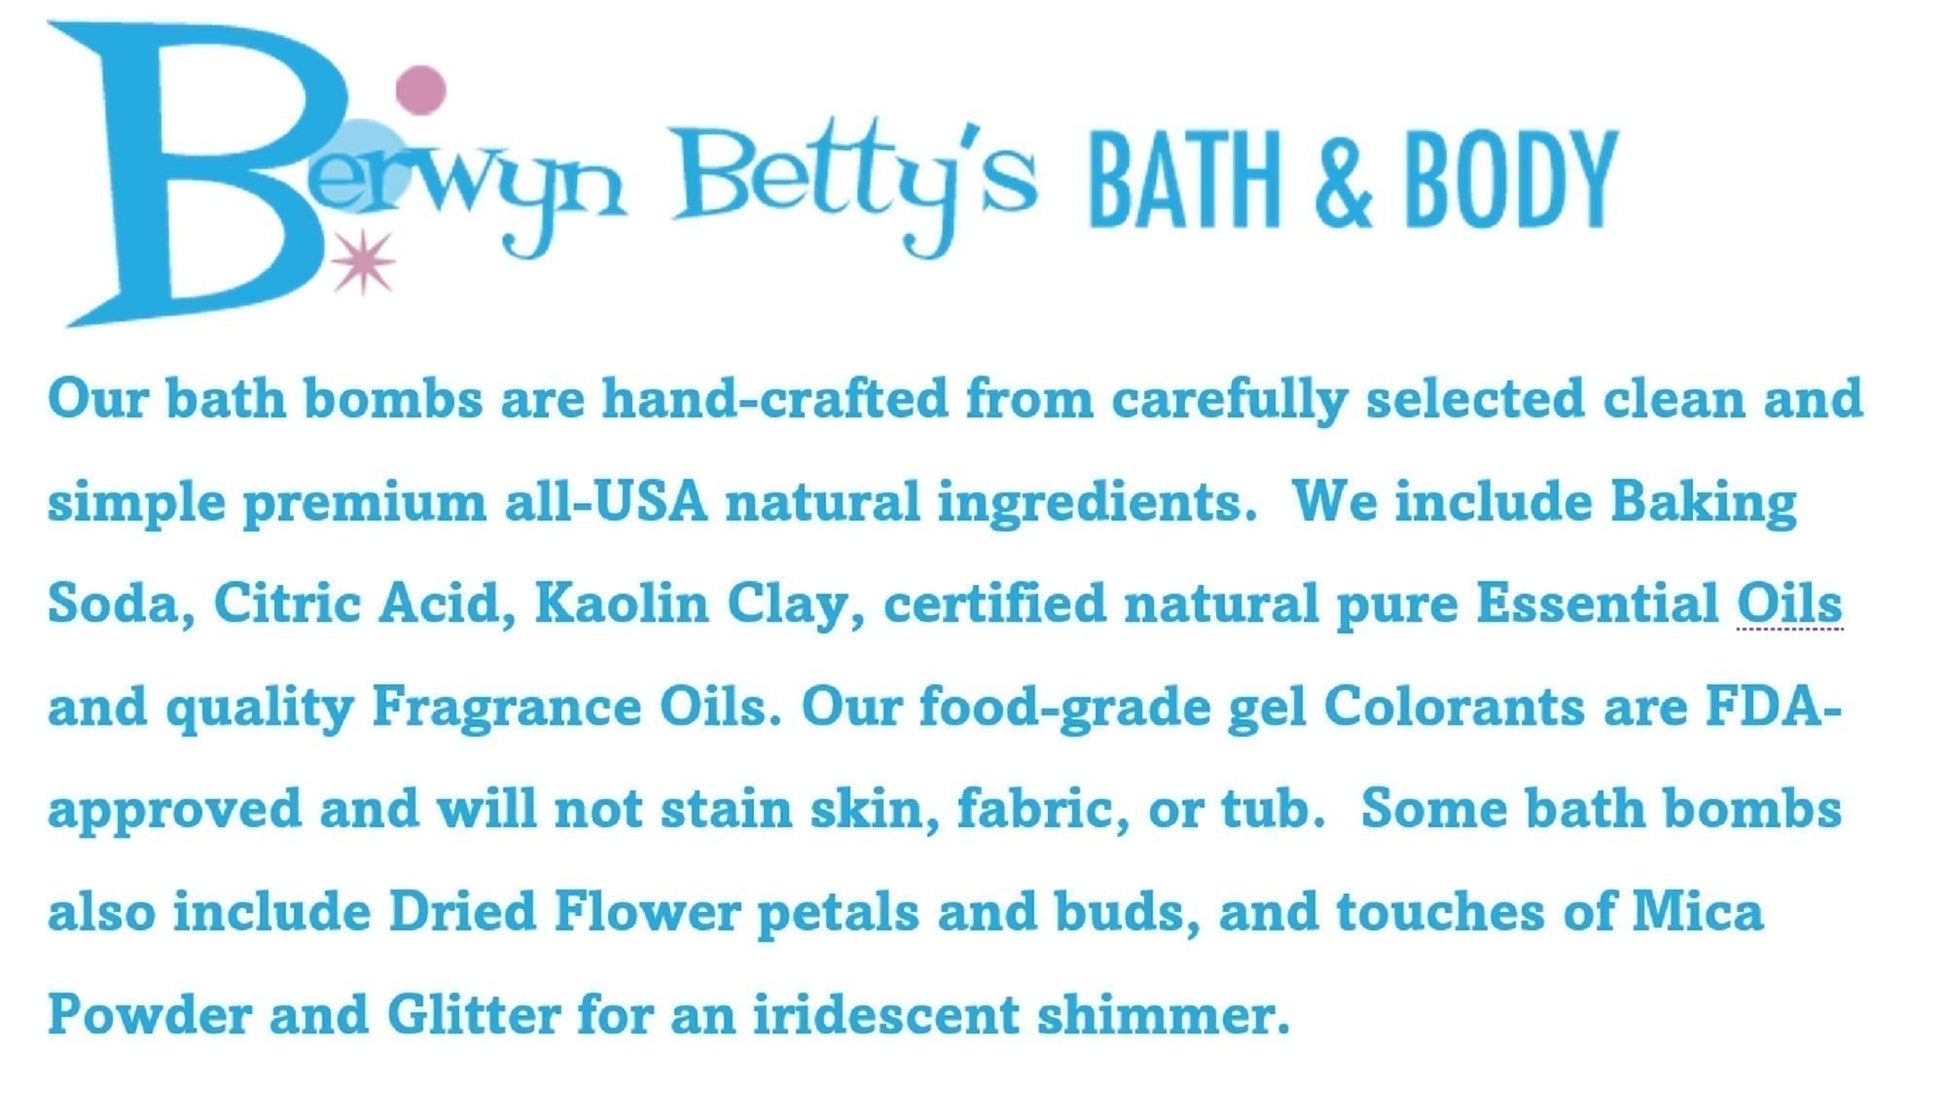 Starlight Mint Bath Bomb with Holiday Ninja Inside - Berwyn Betty's Bath & Body Shop